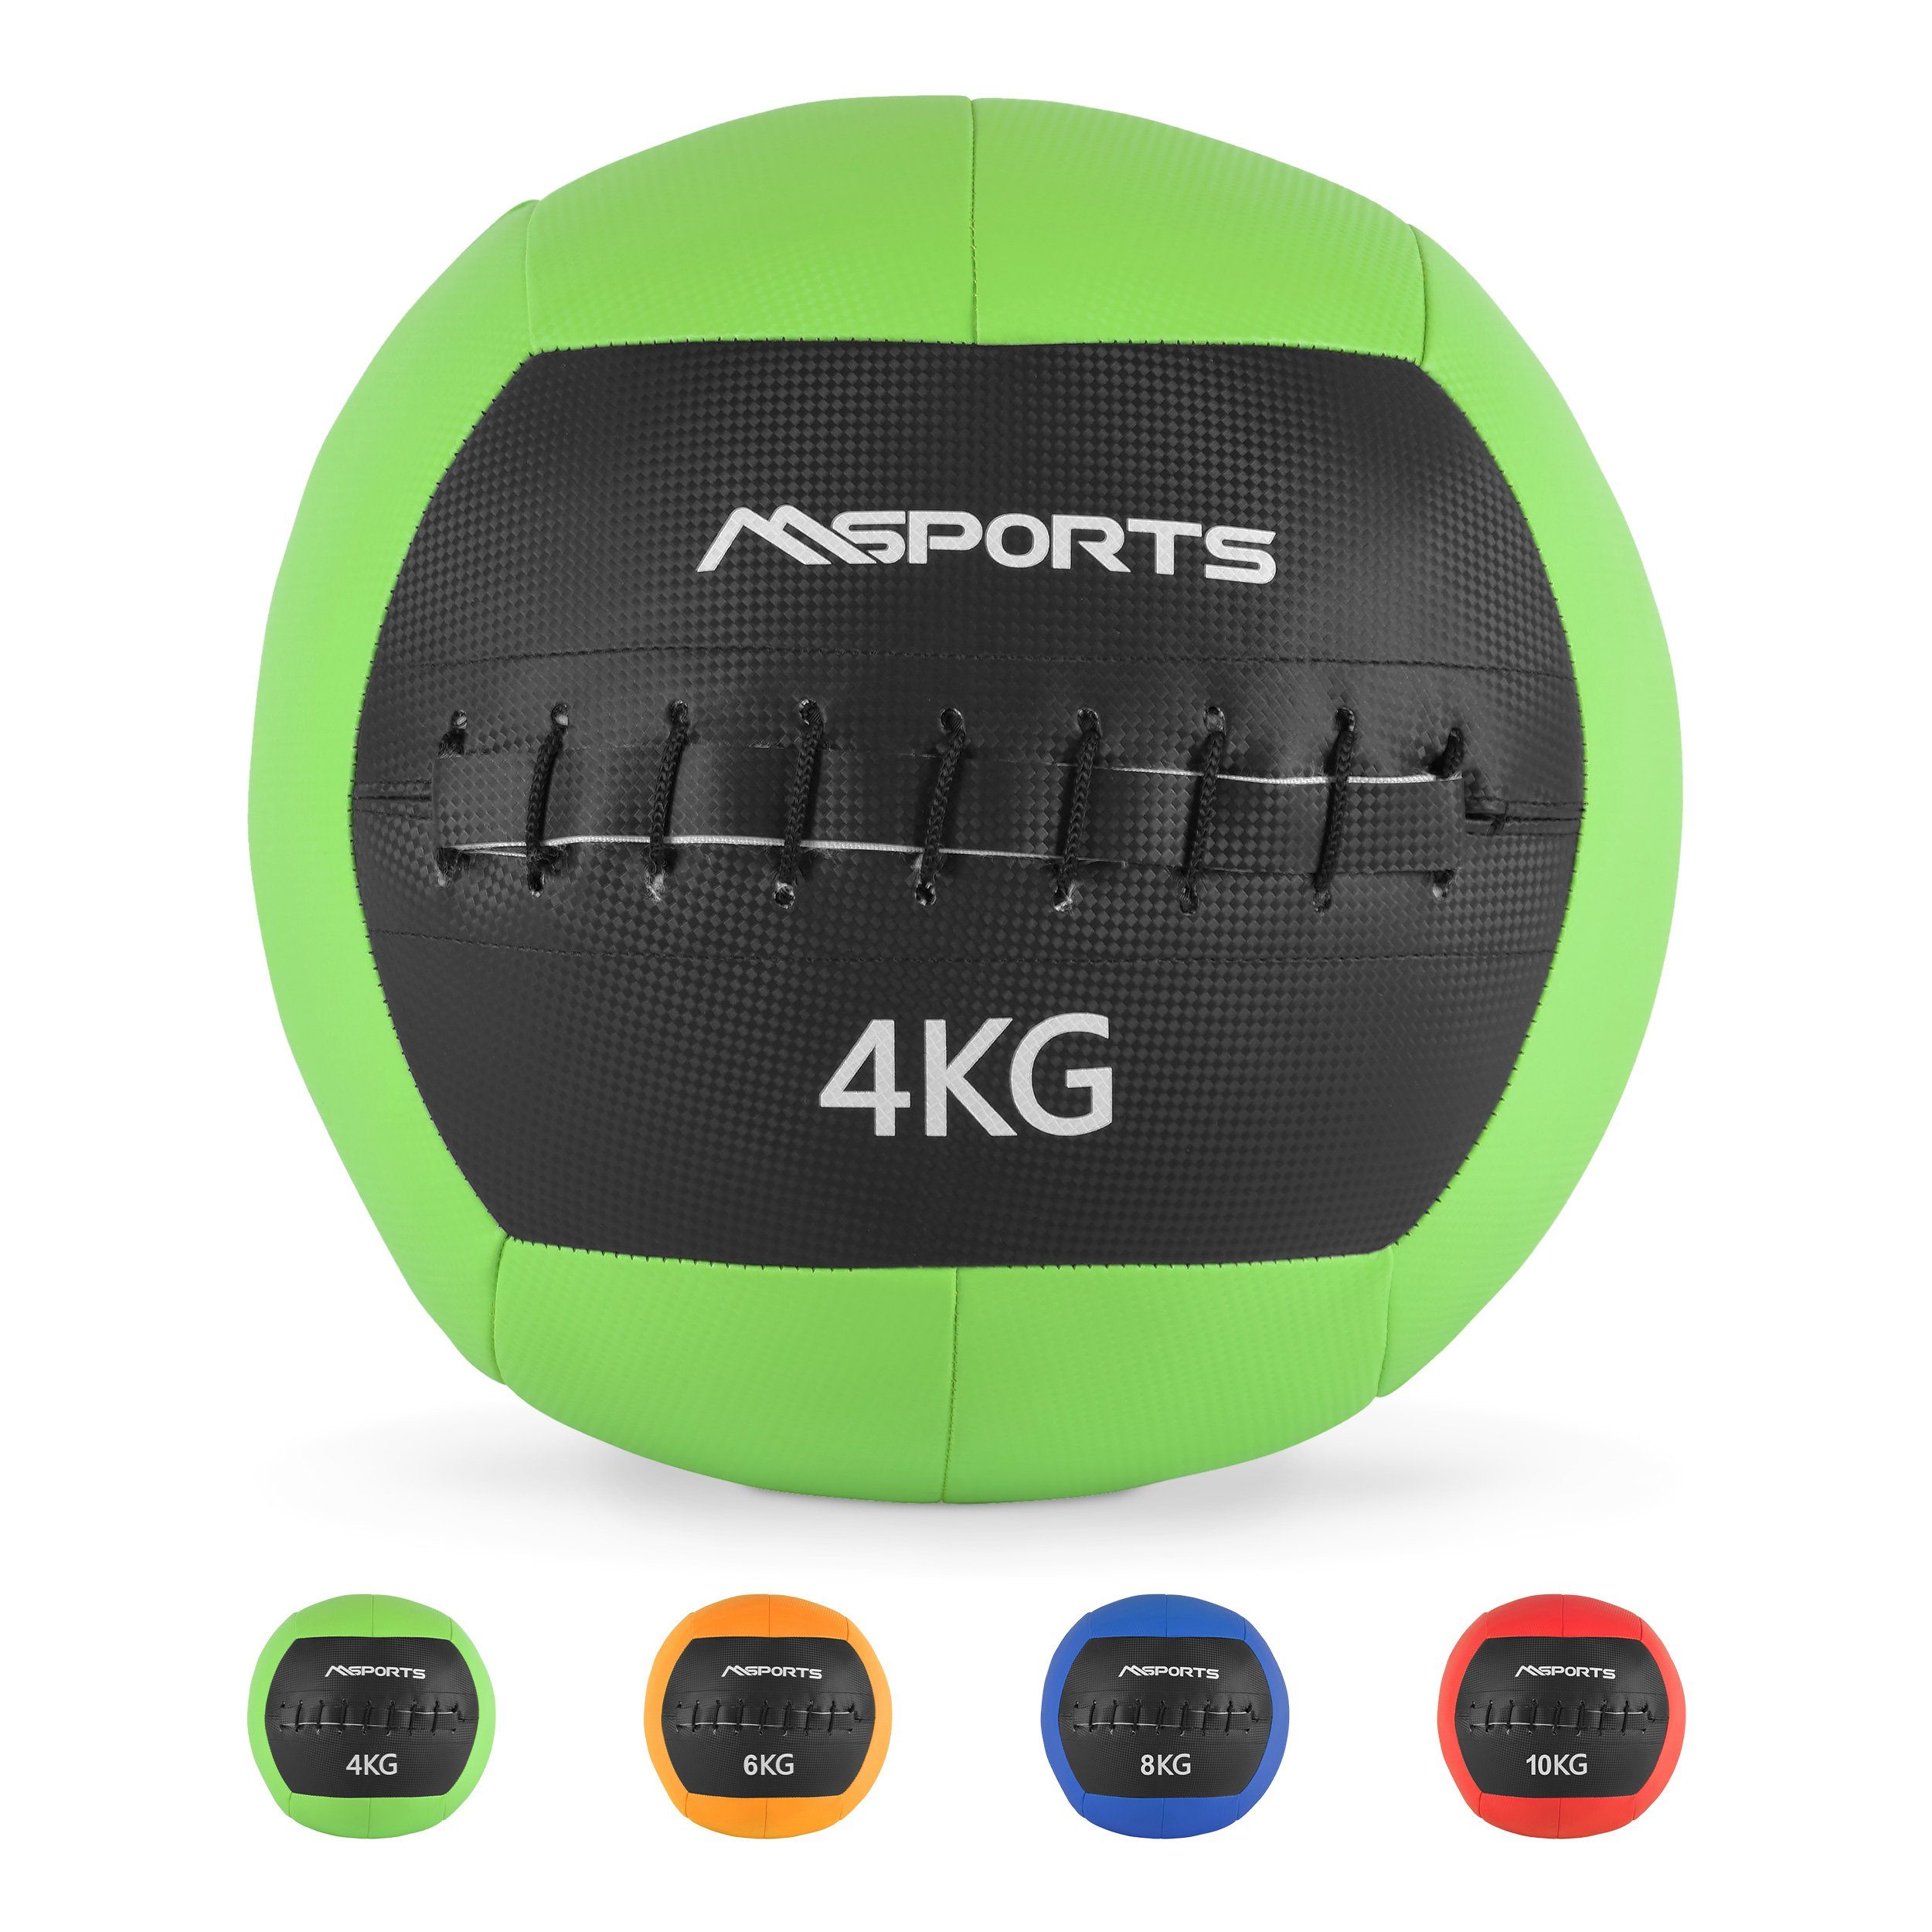 Rechnung MSports® Medizinball Wall-Ball Premium kg Gewichtsball 4 10 Farben - verschiedenen - Grün kg 2 in